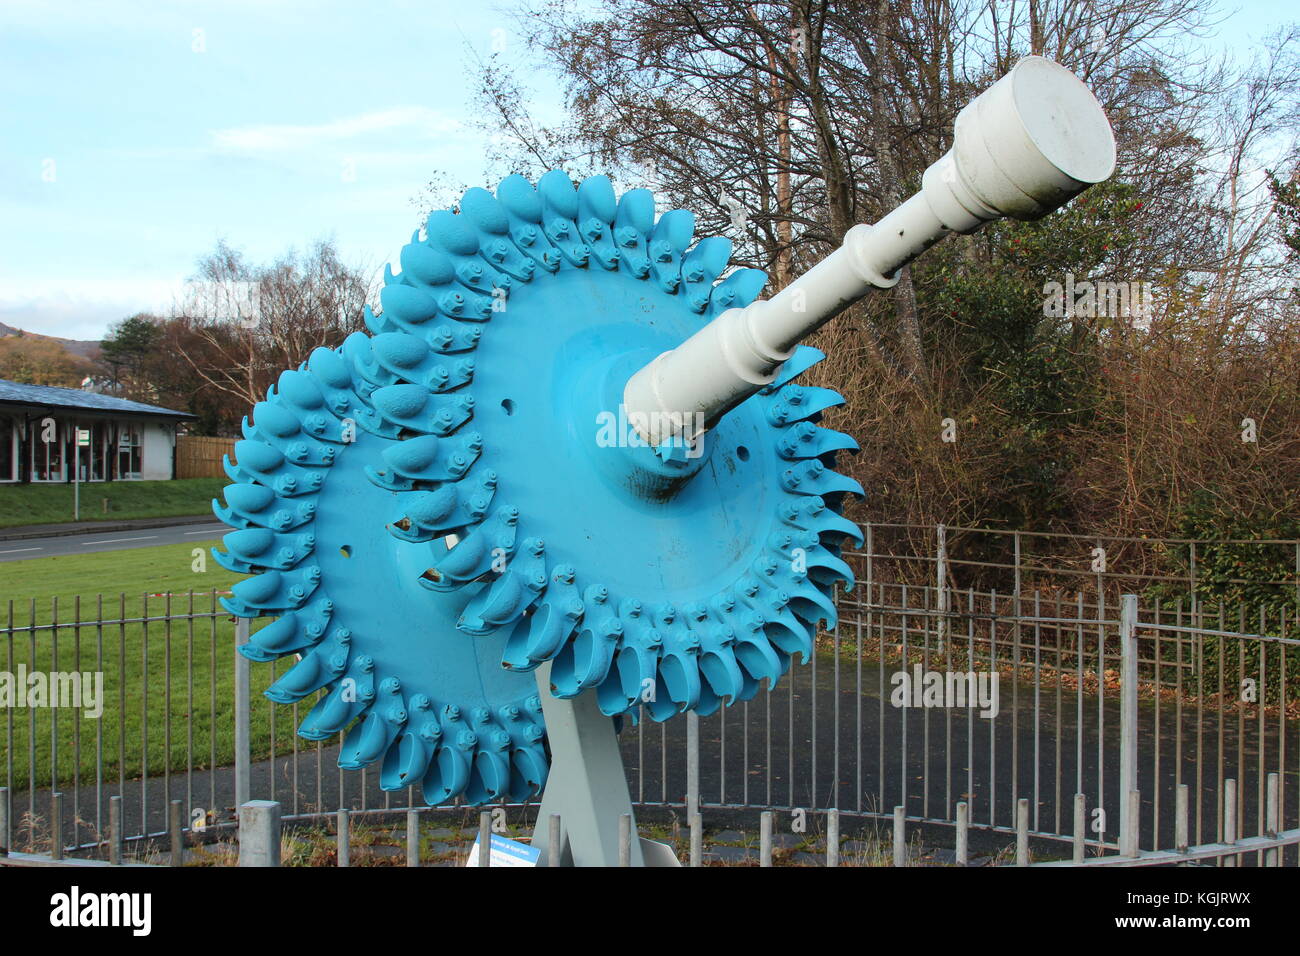 turbina de agua pelton energía renovable 9930066 Foto de stock en Vecteezy